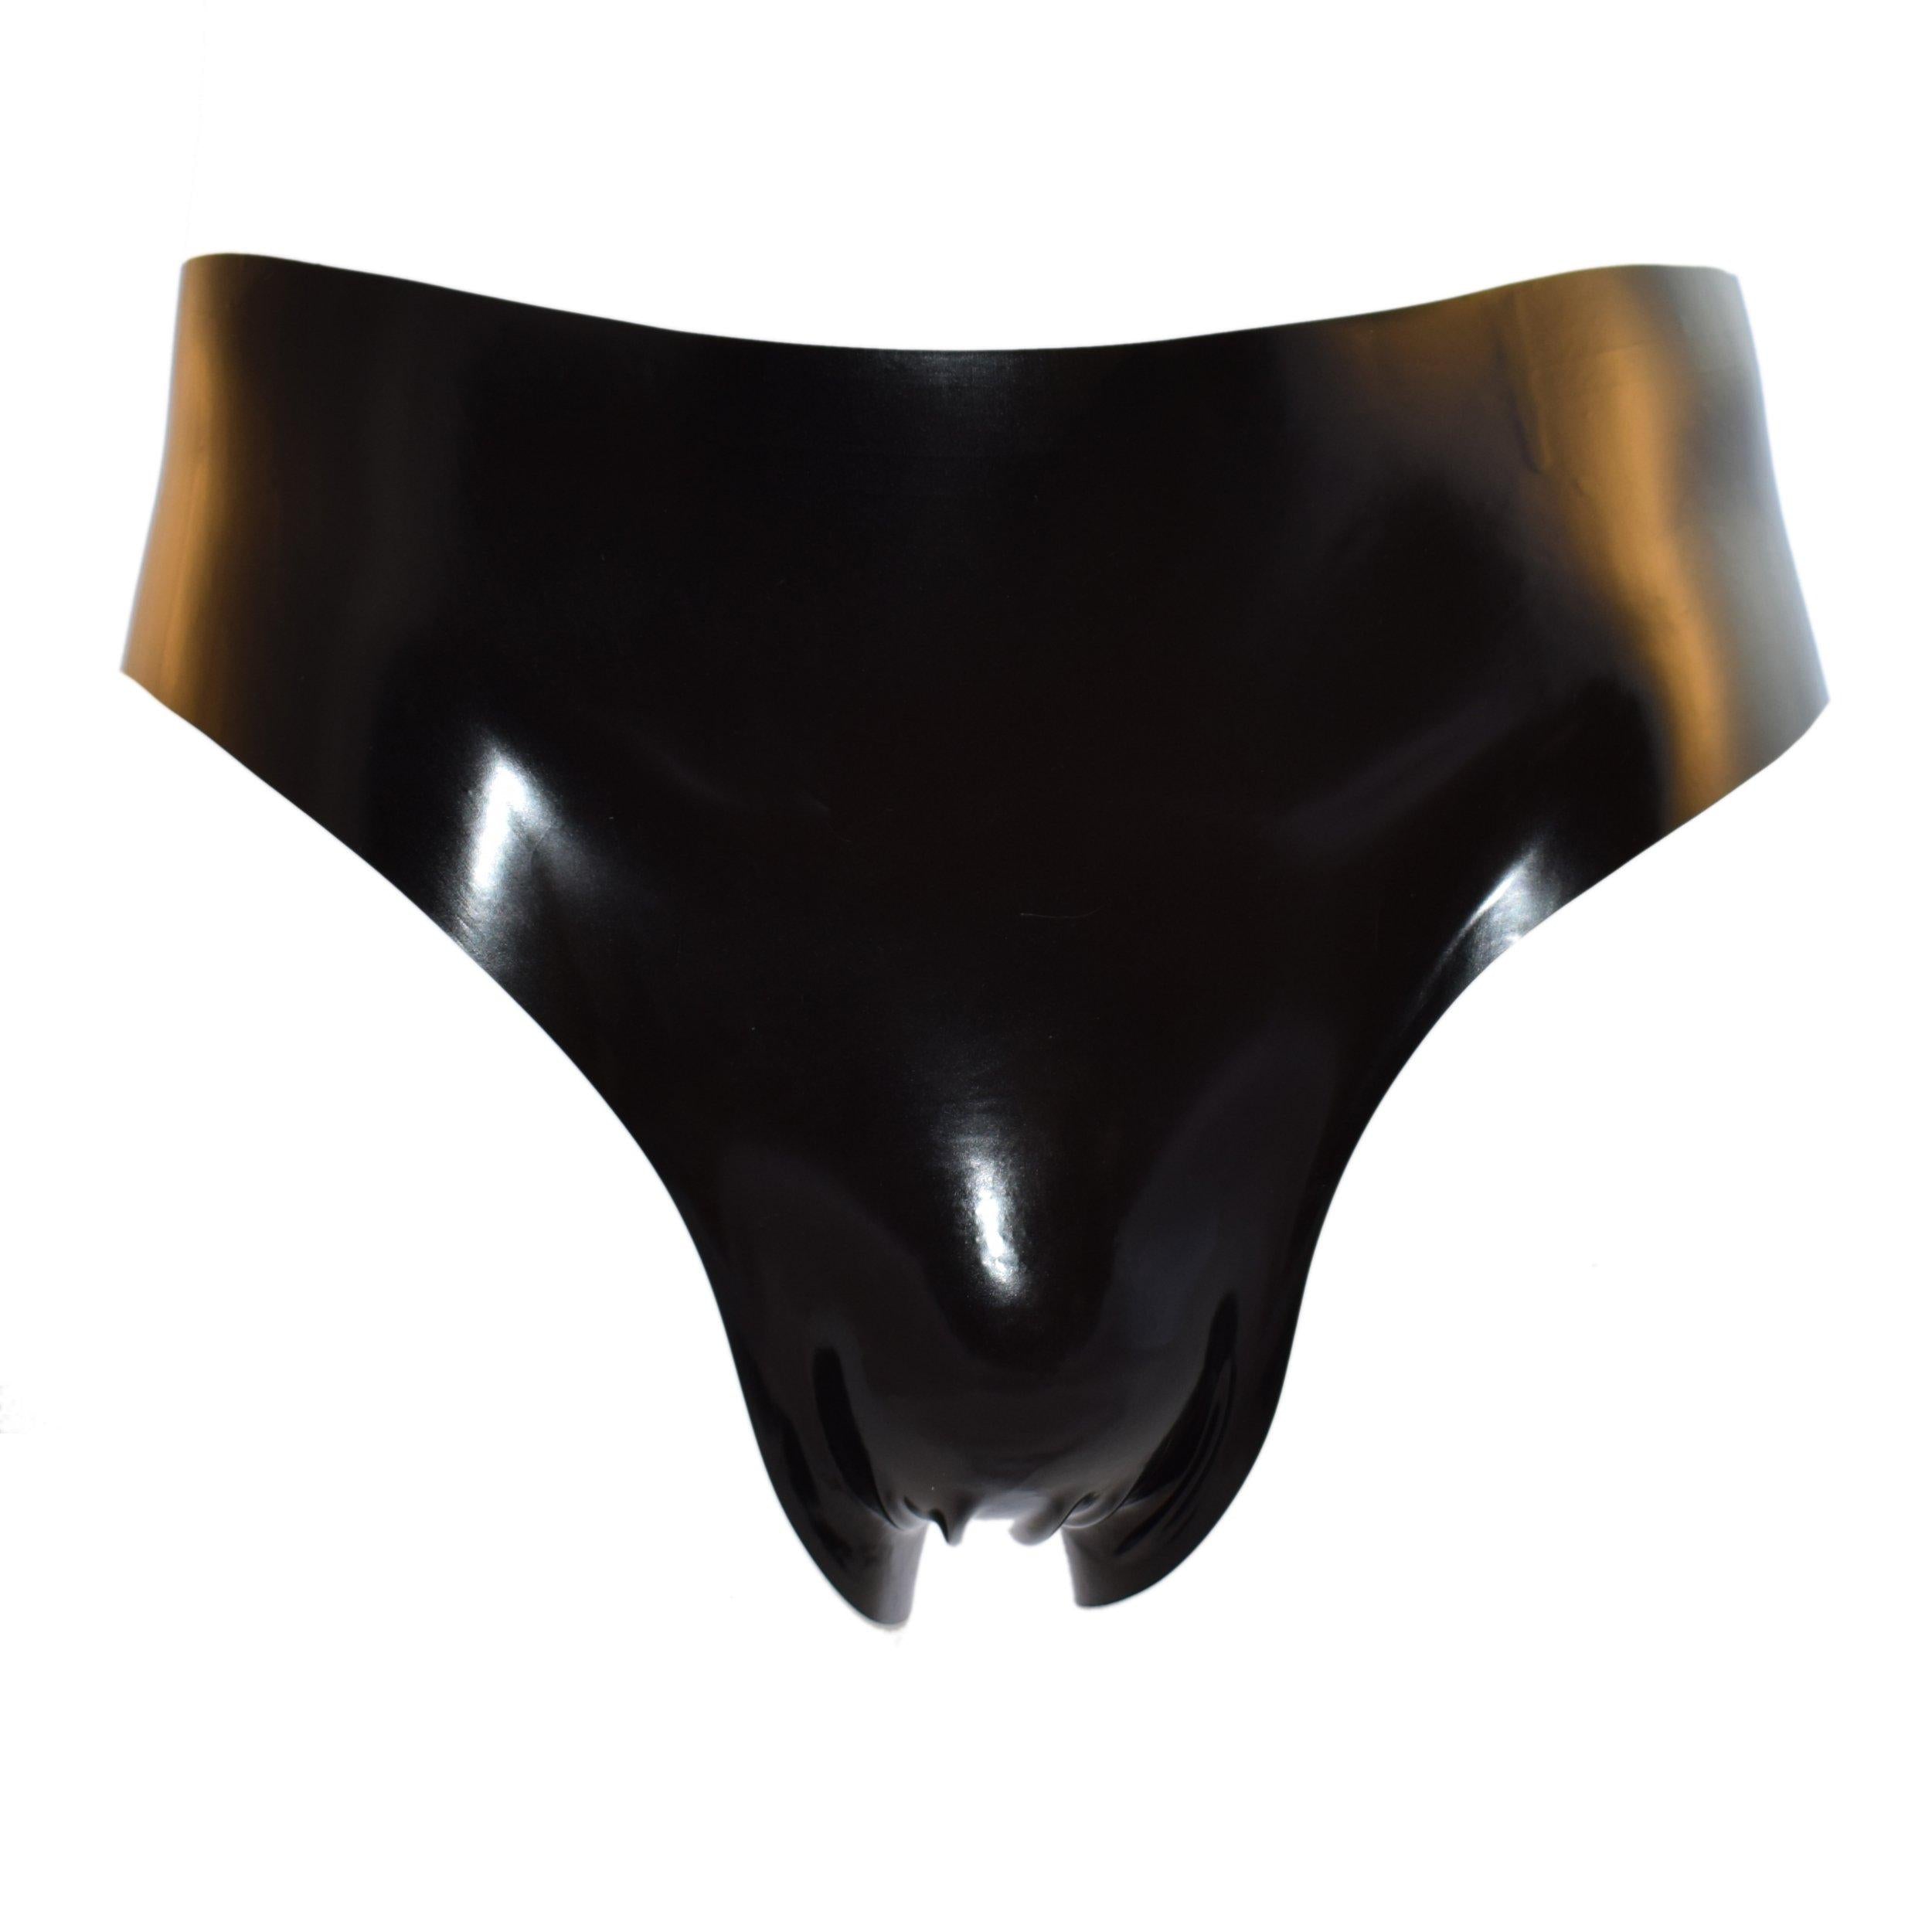 Rubberfashion Latex Slip - Latexslip Kurze sexy Hot Pants hochgeschnitten mit Ausbuchtung - Latex Dessous für Herren